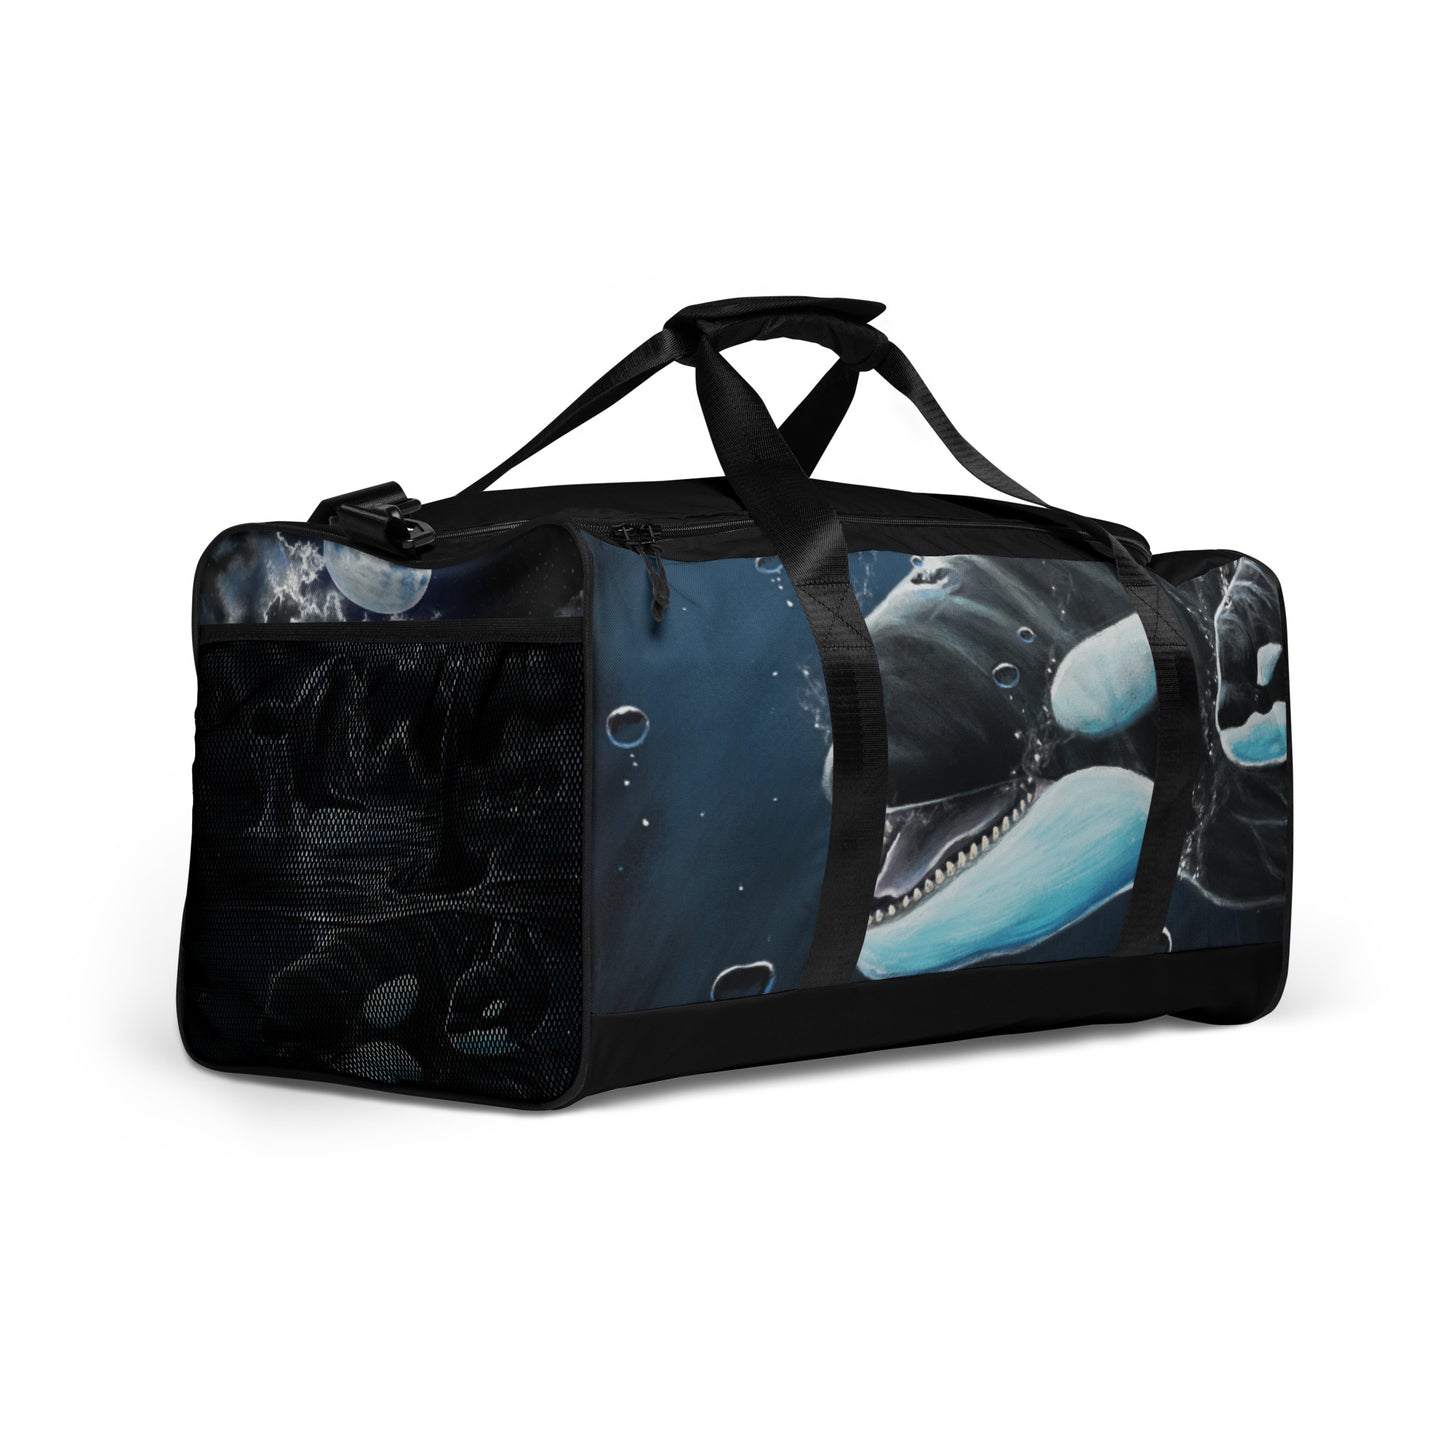 "Moonlit playtime" orcas Duffle bag